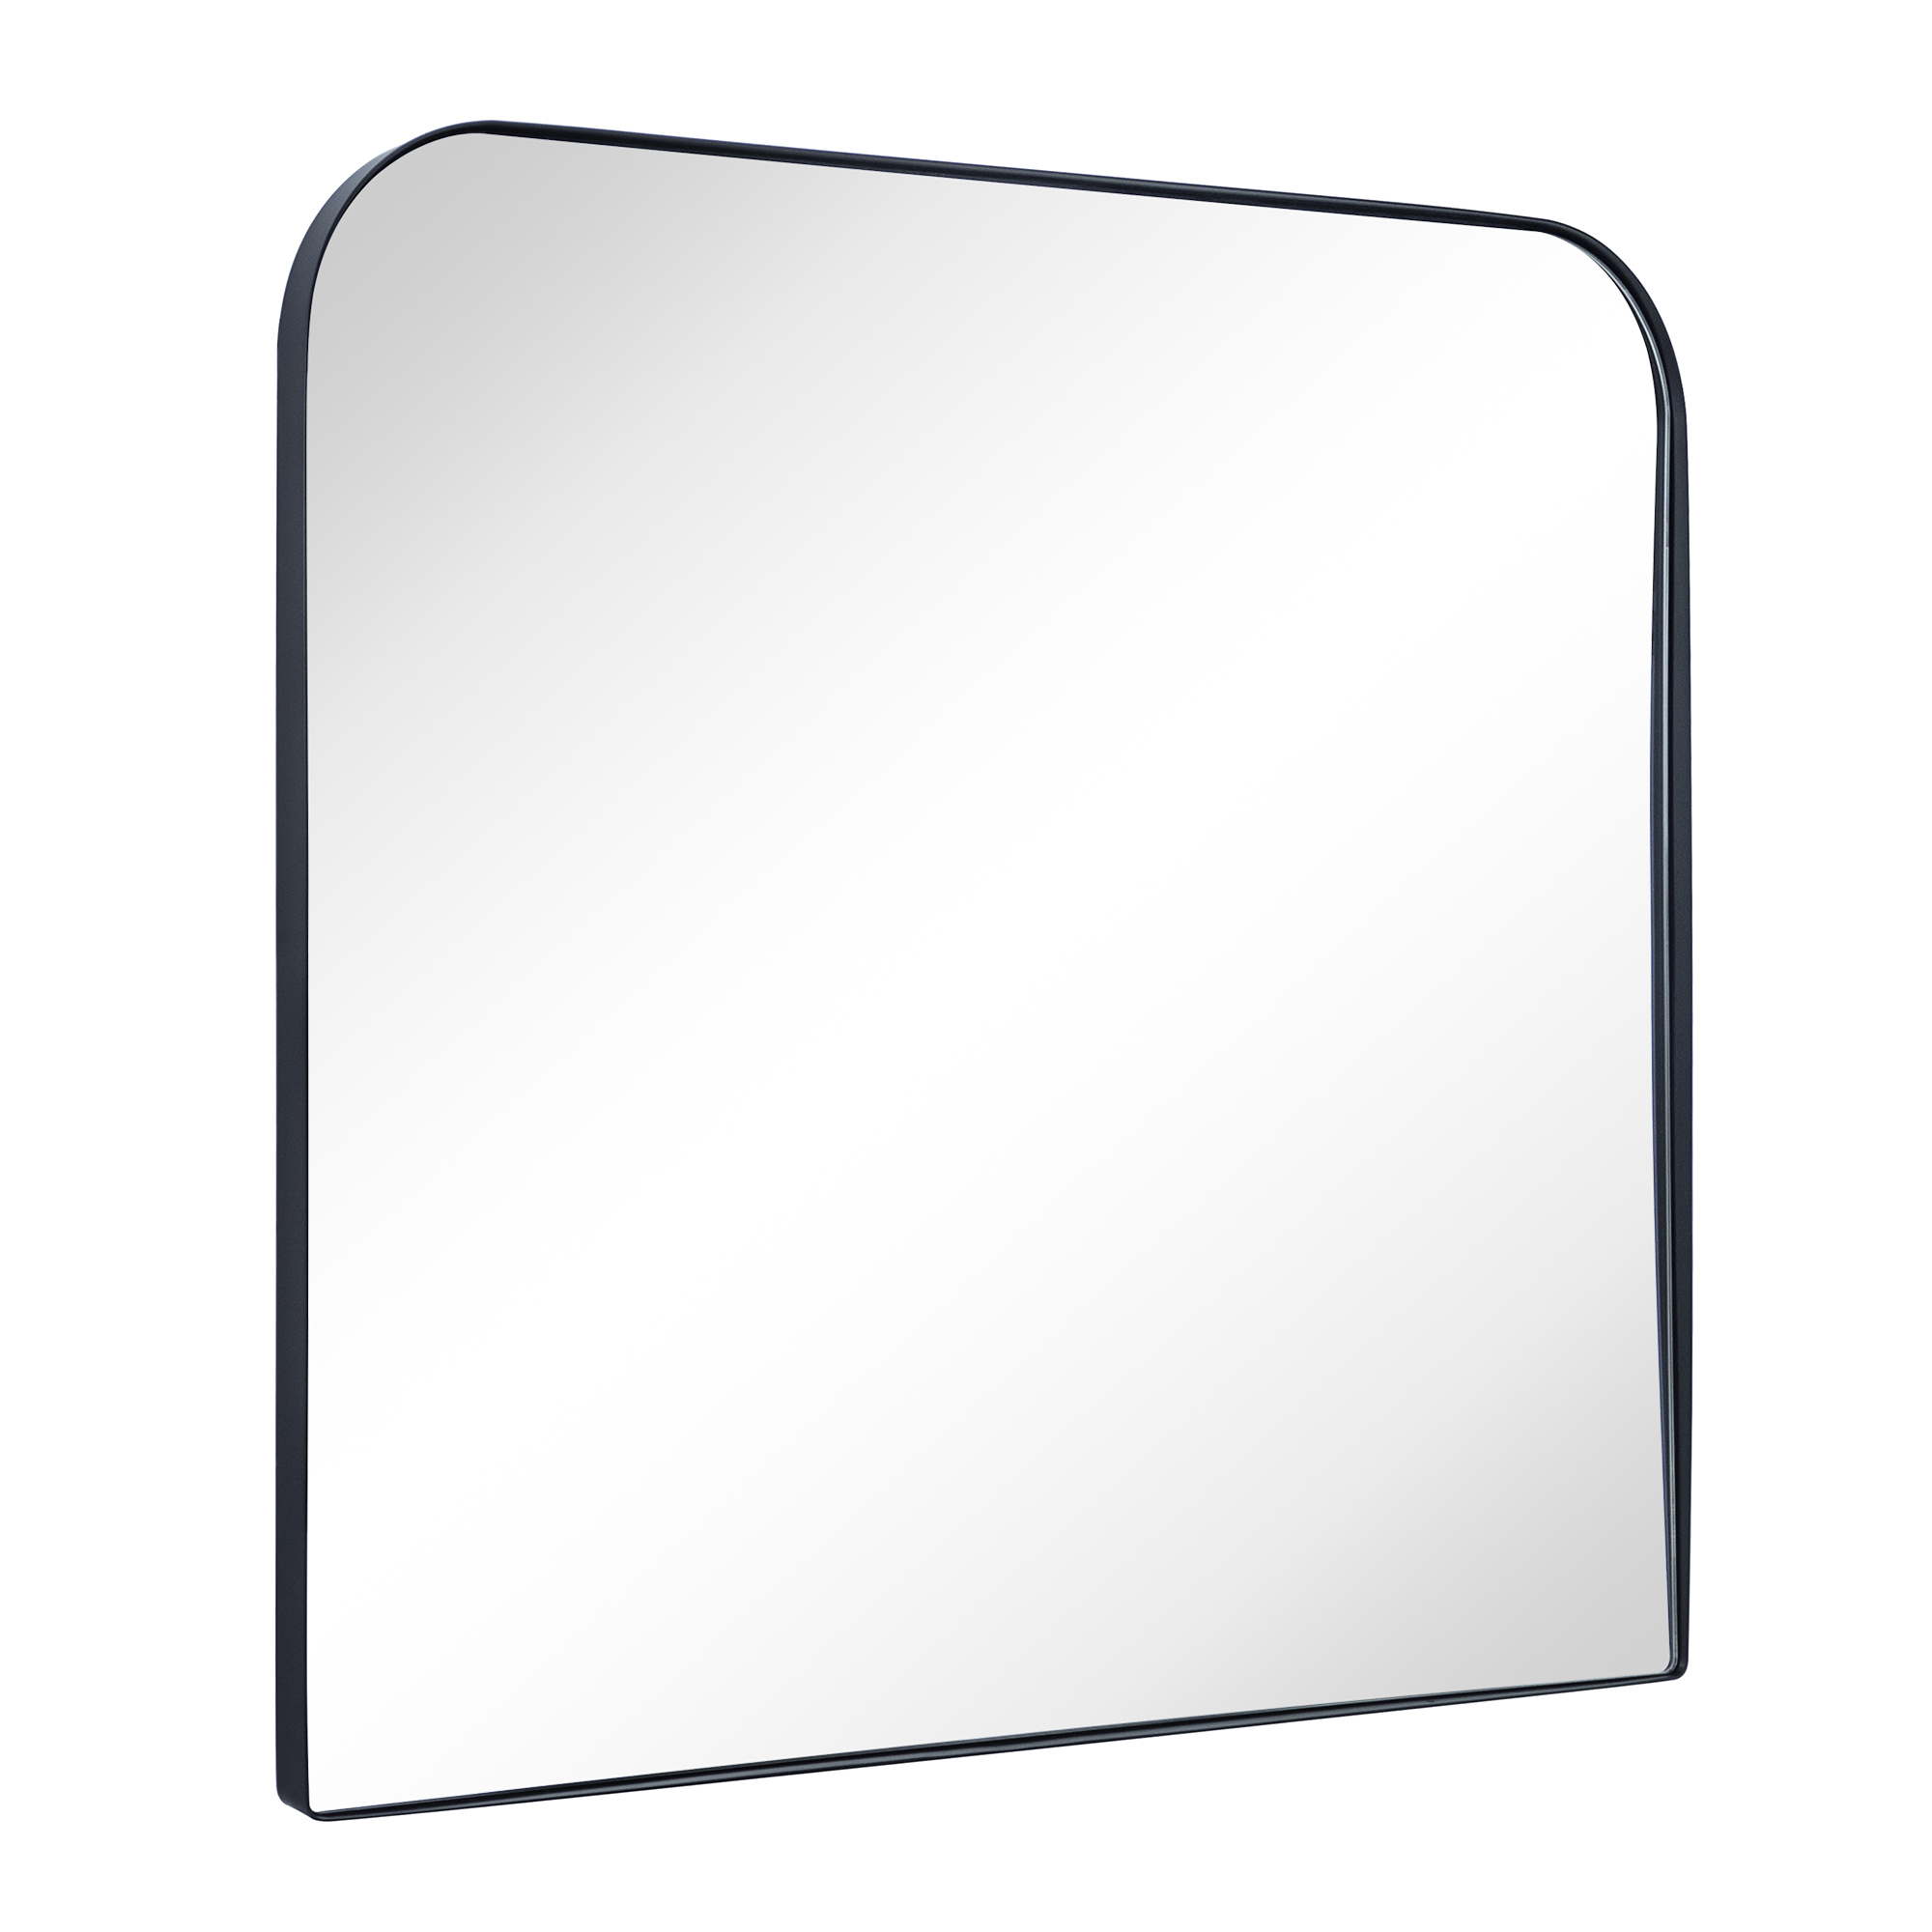 Decole Arch Metal Wall Mirror-30x34-Black